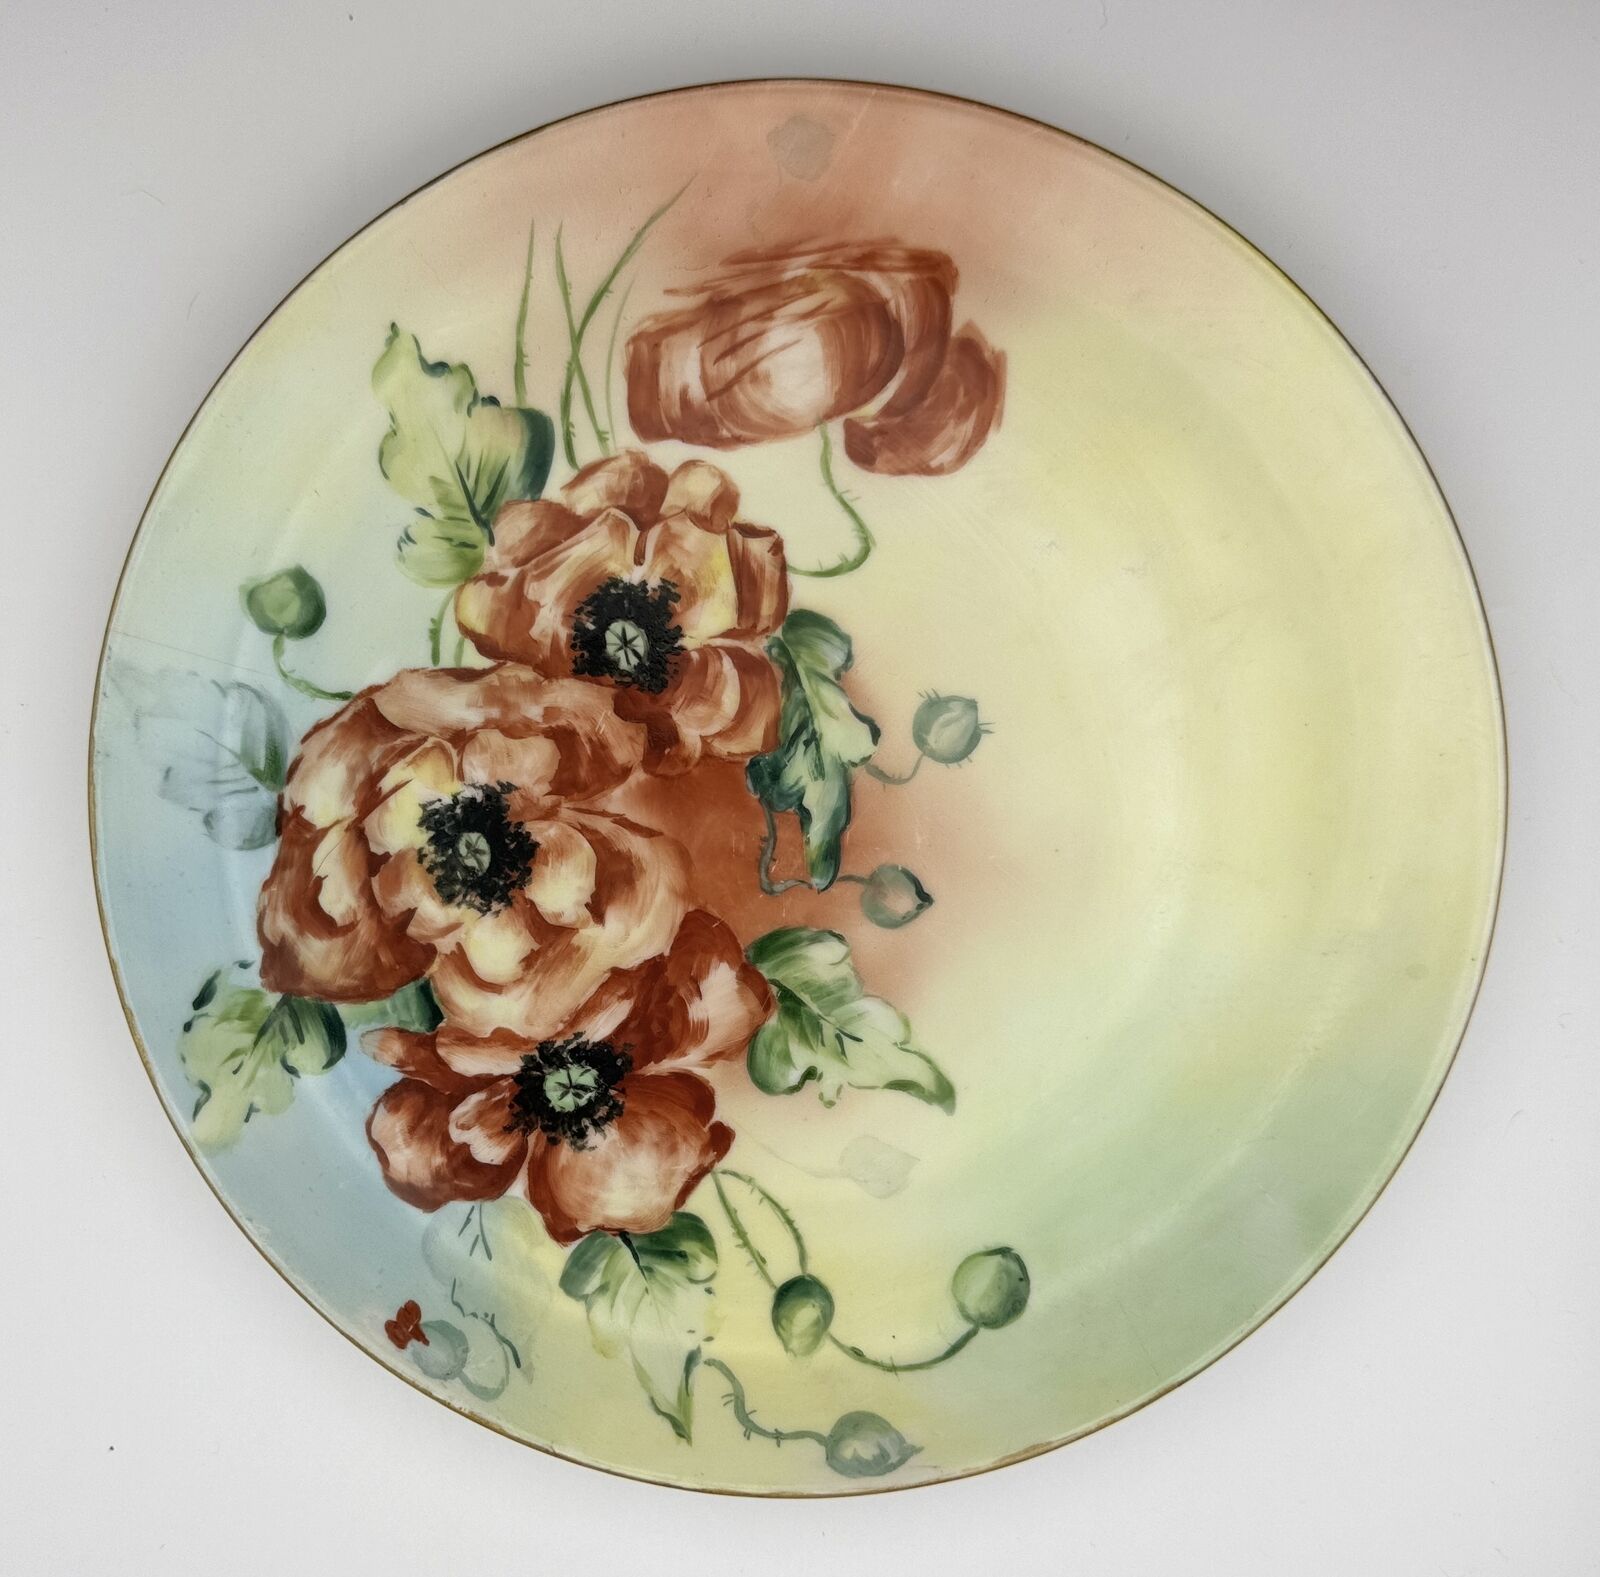 Antique J&C Hand-Painted Porcelain Plate with Floral Design